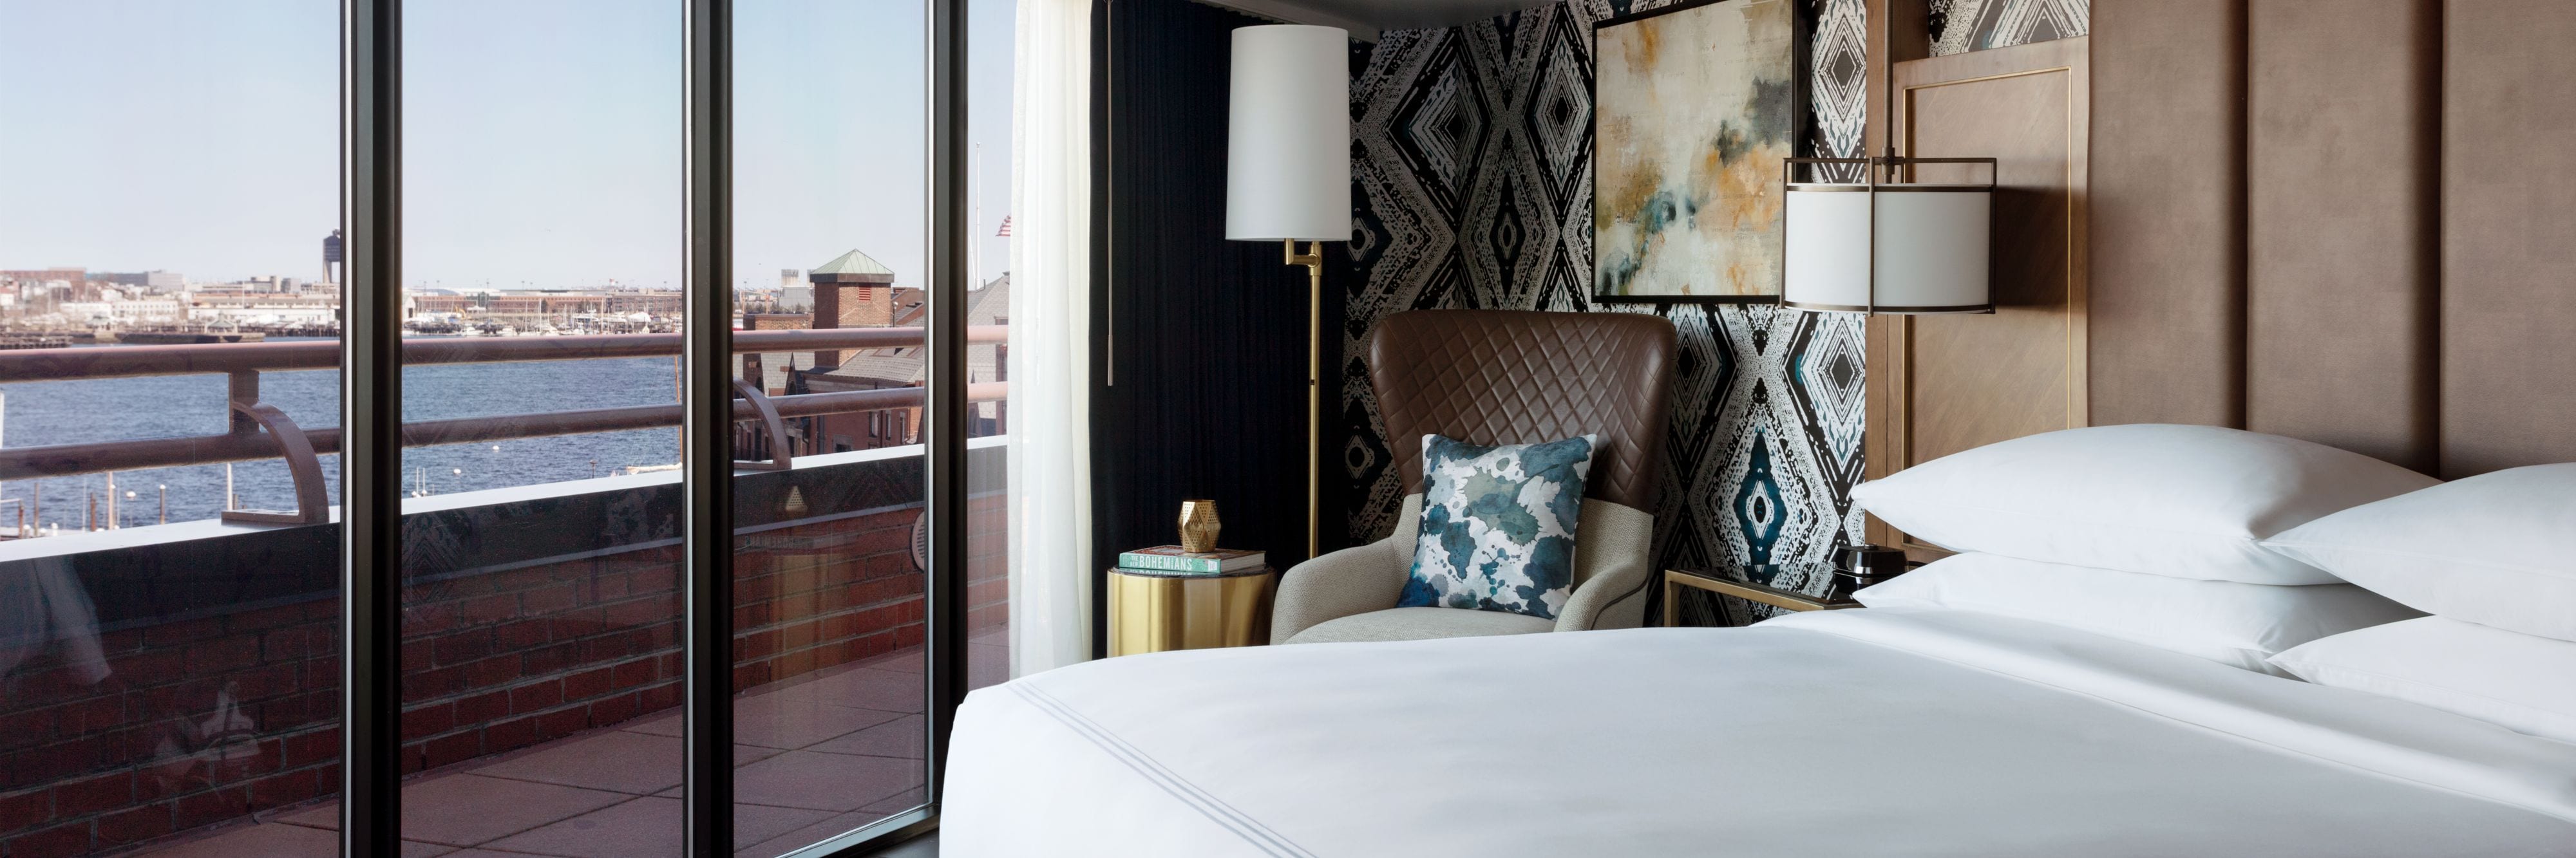 Luxury Waterfront Suite - Bedroom & Balcony